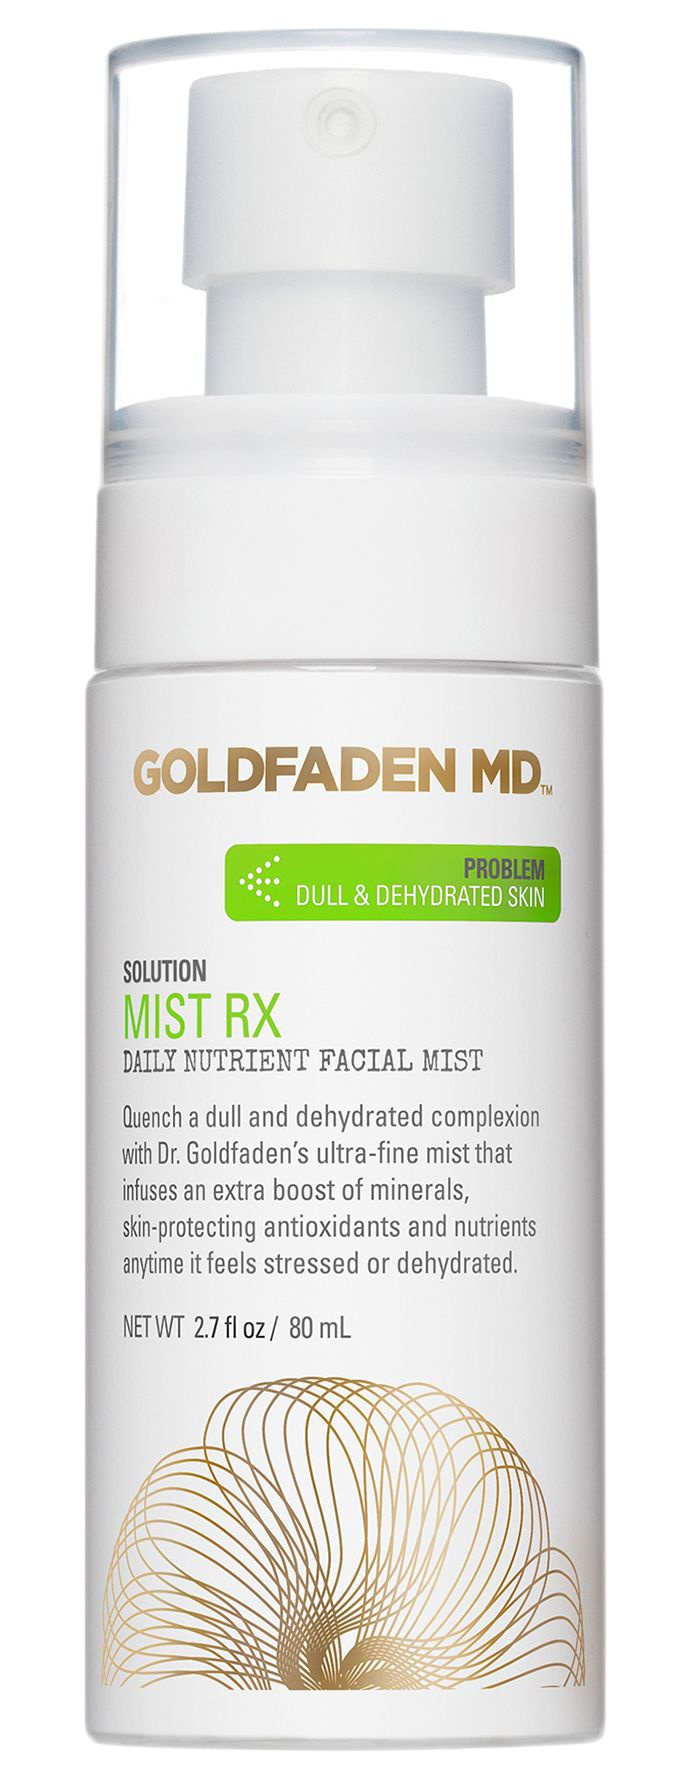 Goldfaden MD Mist Rx Daily Nutrient Facial Mist